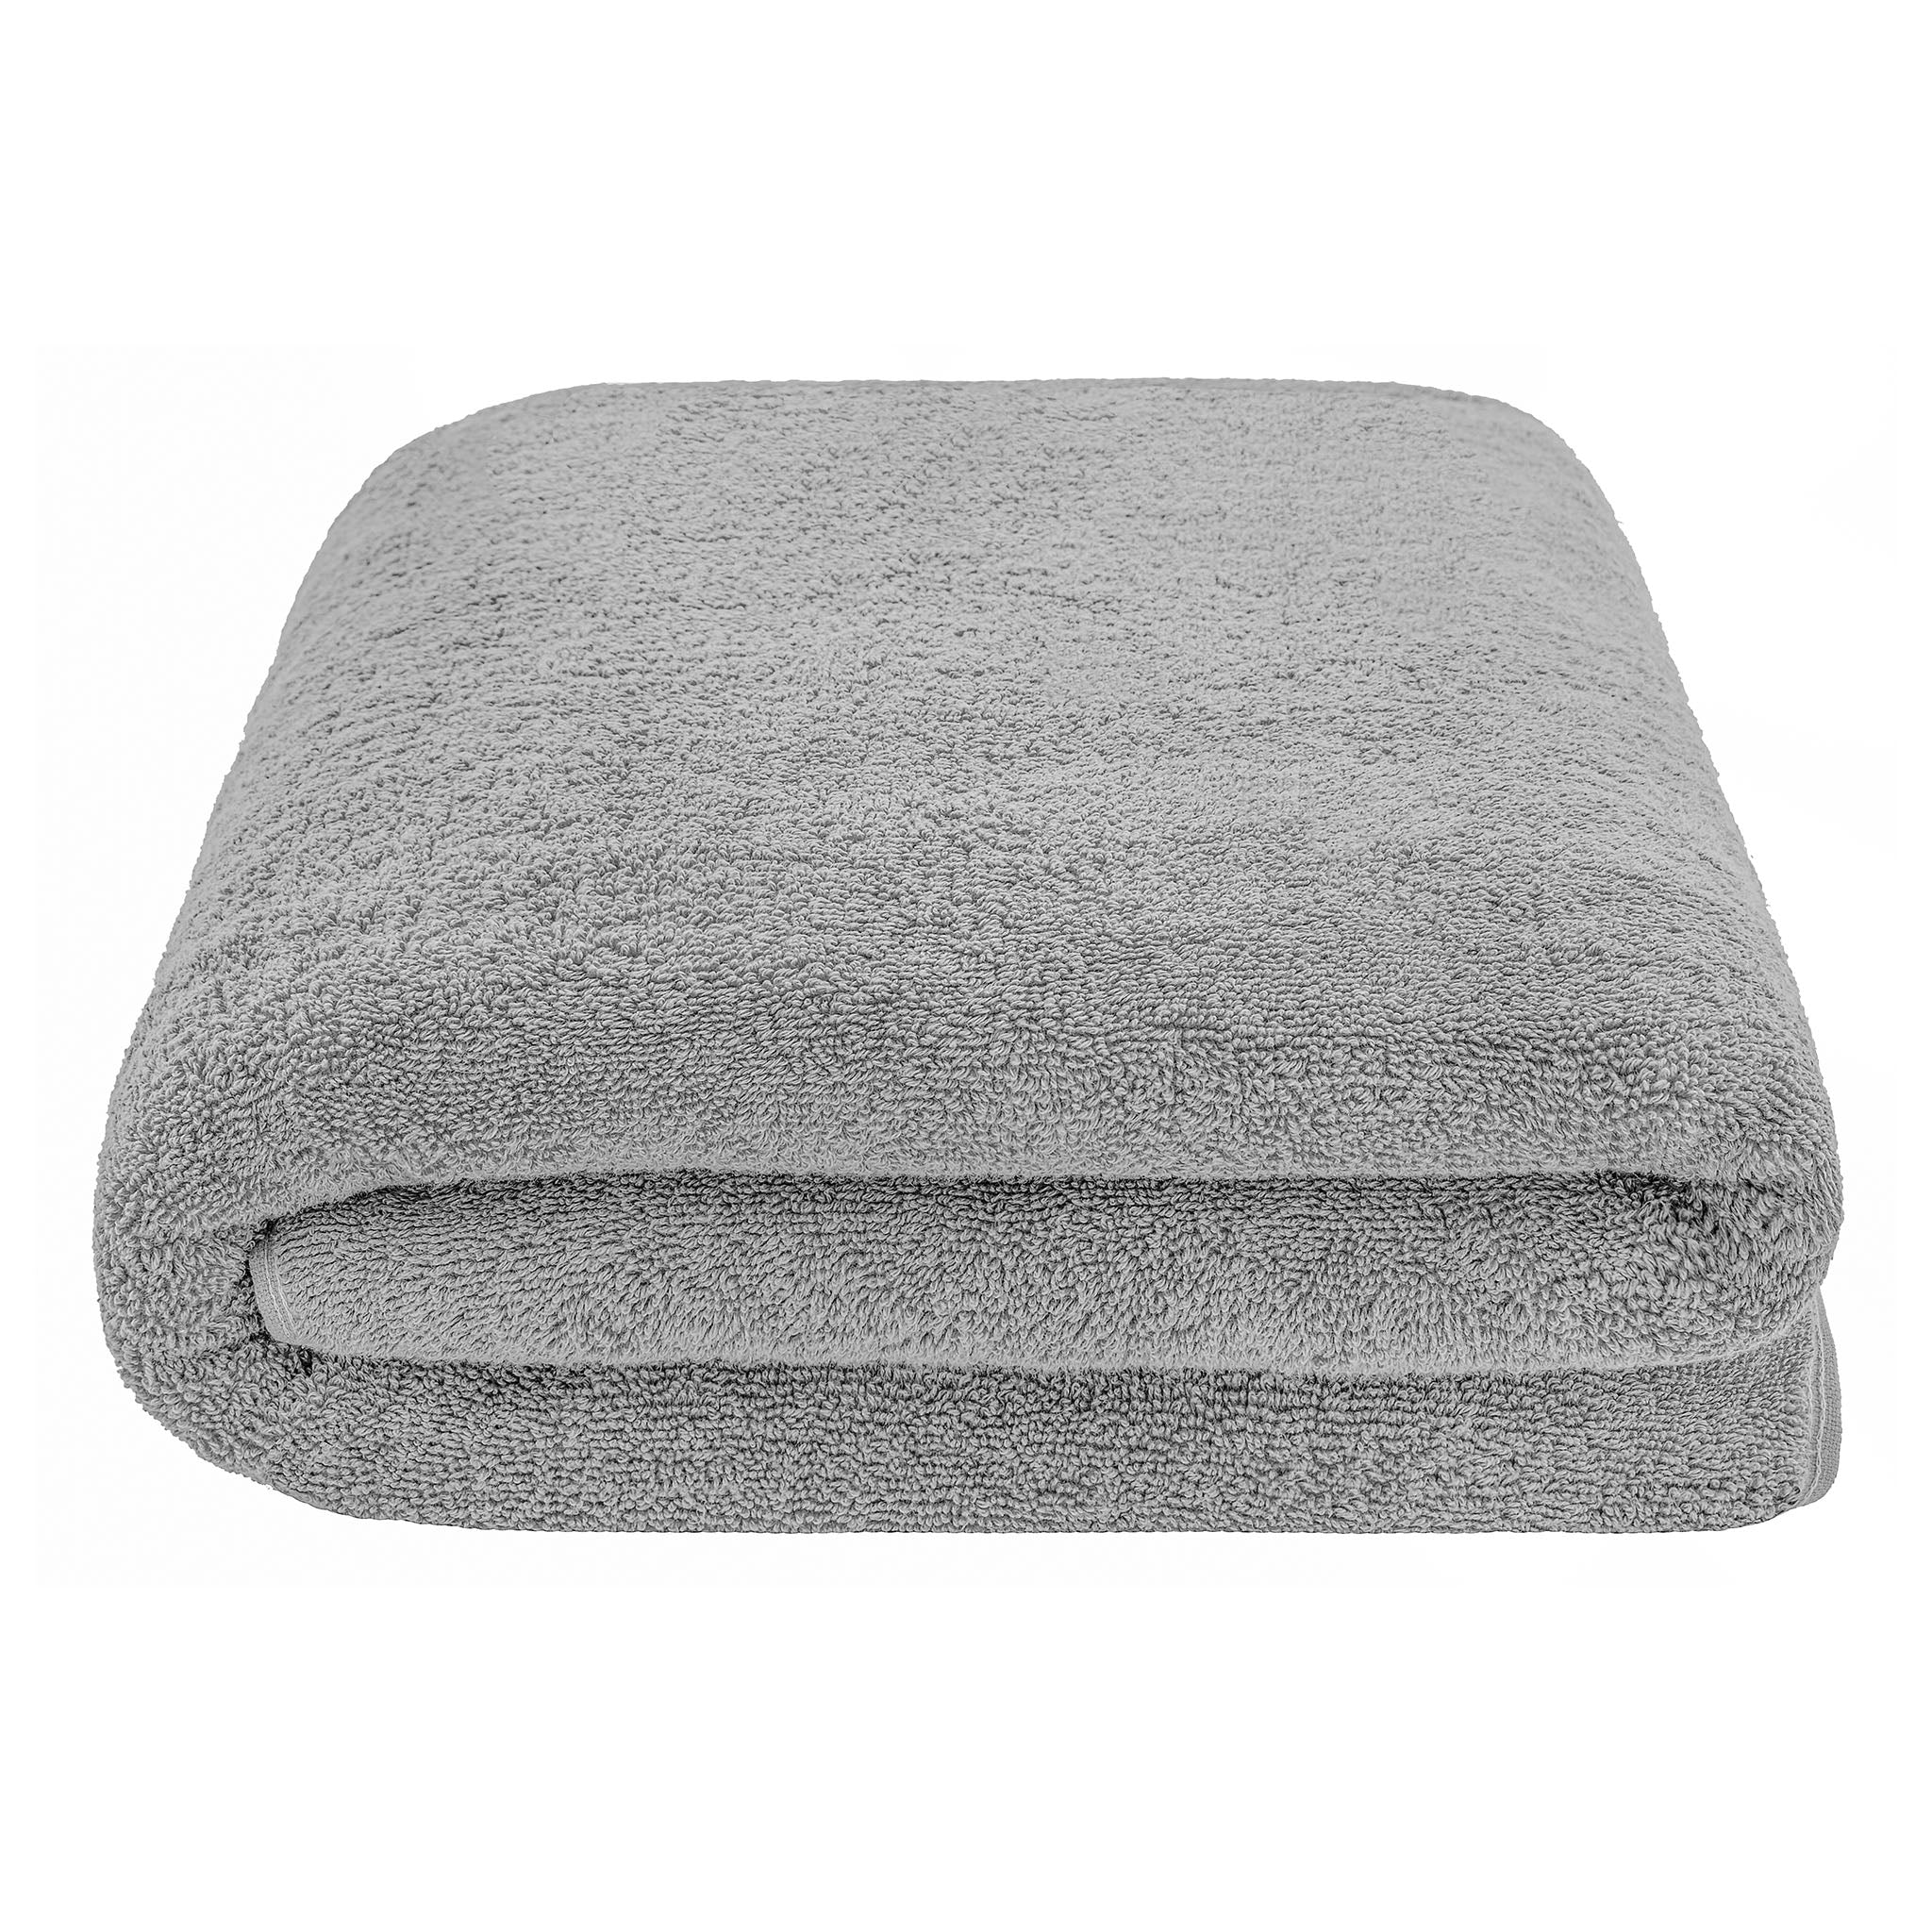 American Soft Linen Bath Sheet 40x80 inch 100% Cotton Extra Large Oversized Bath Towel Sheet - Dark Gray, Size: Oversized Bath Sheet 40x80